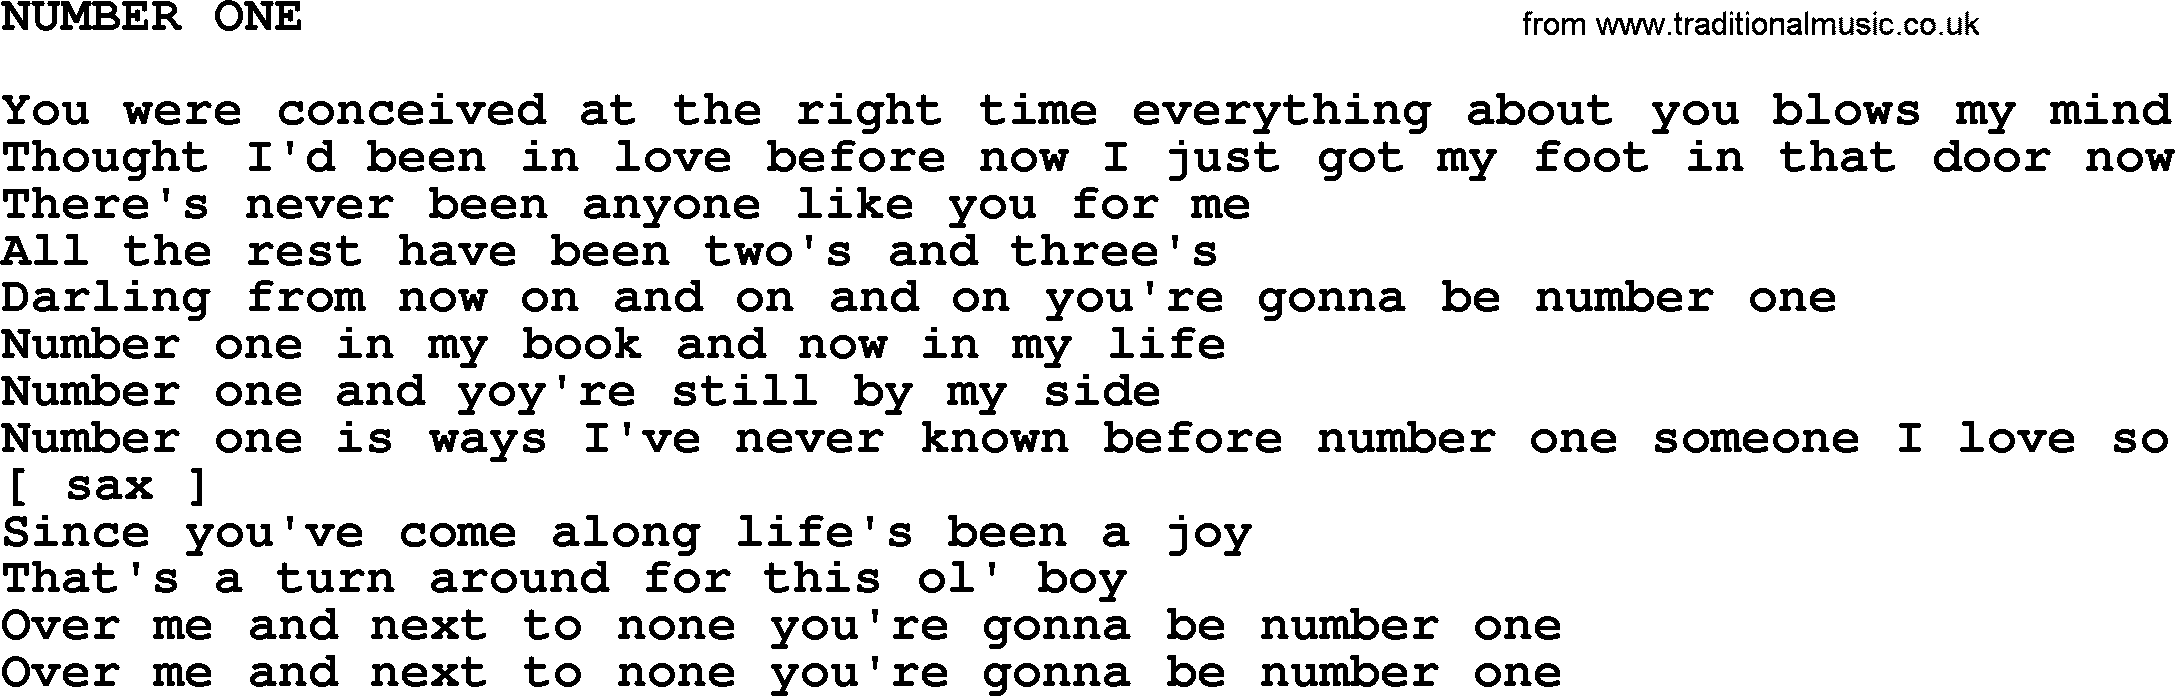 Kris Kristofferson song: Number One lyrics